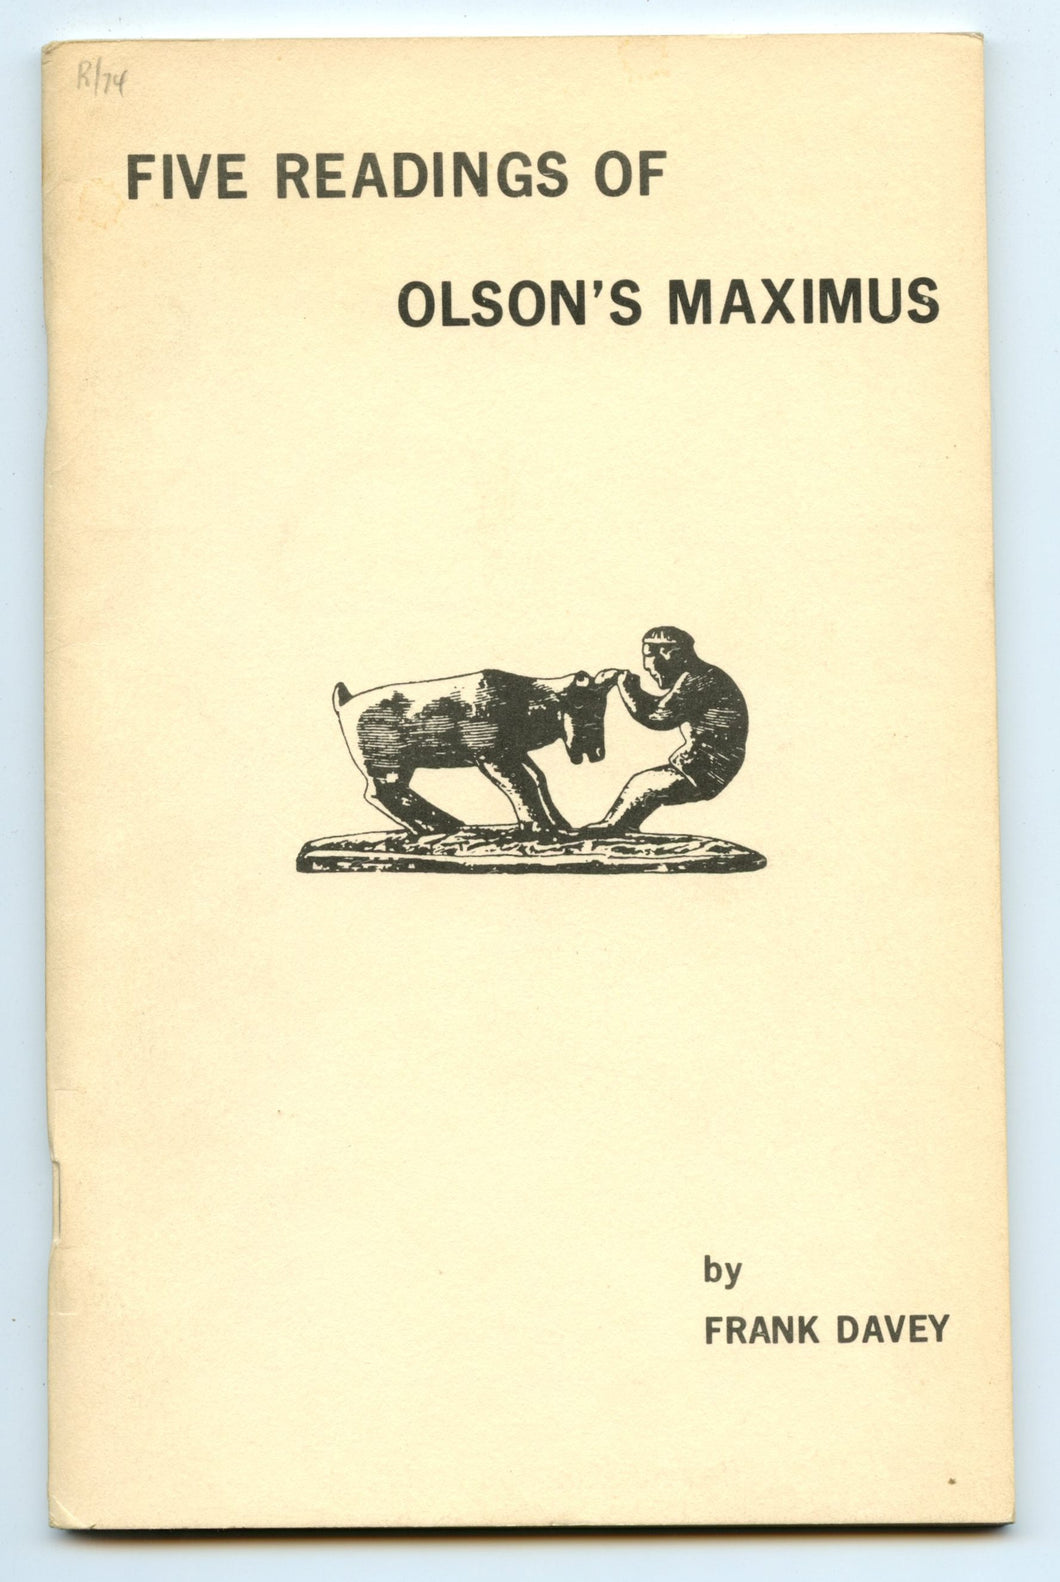 Five Readings of Olson's Maximus